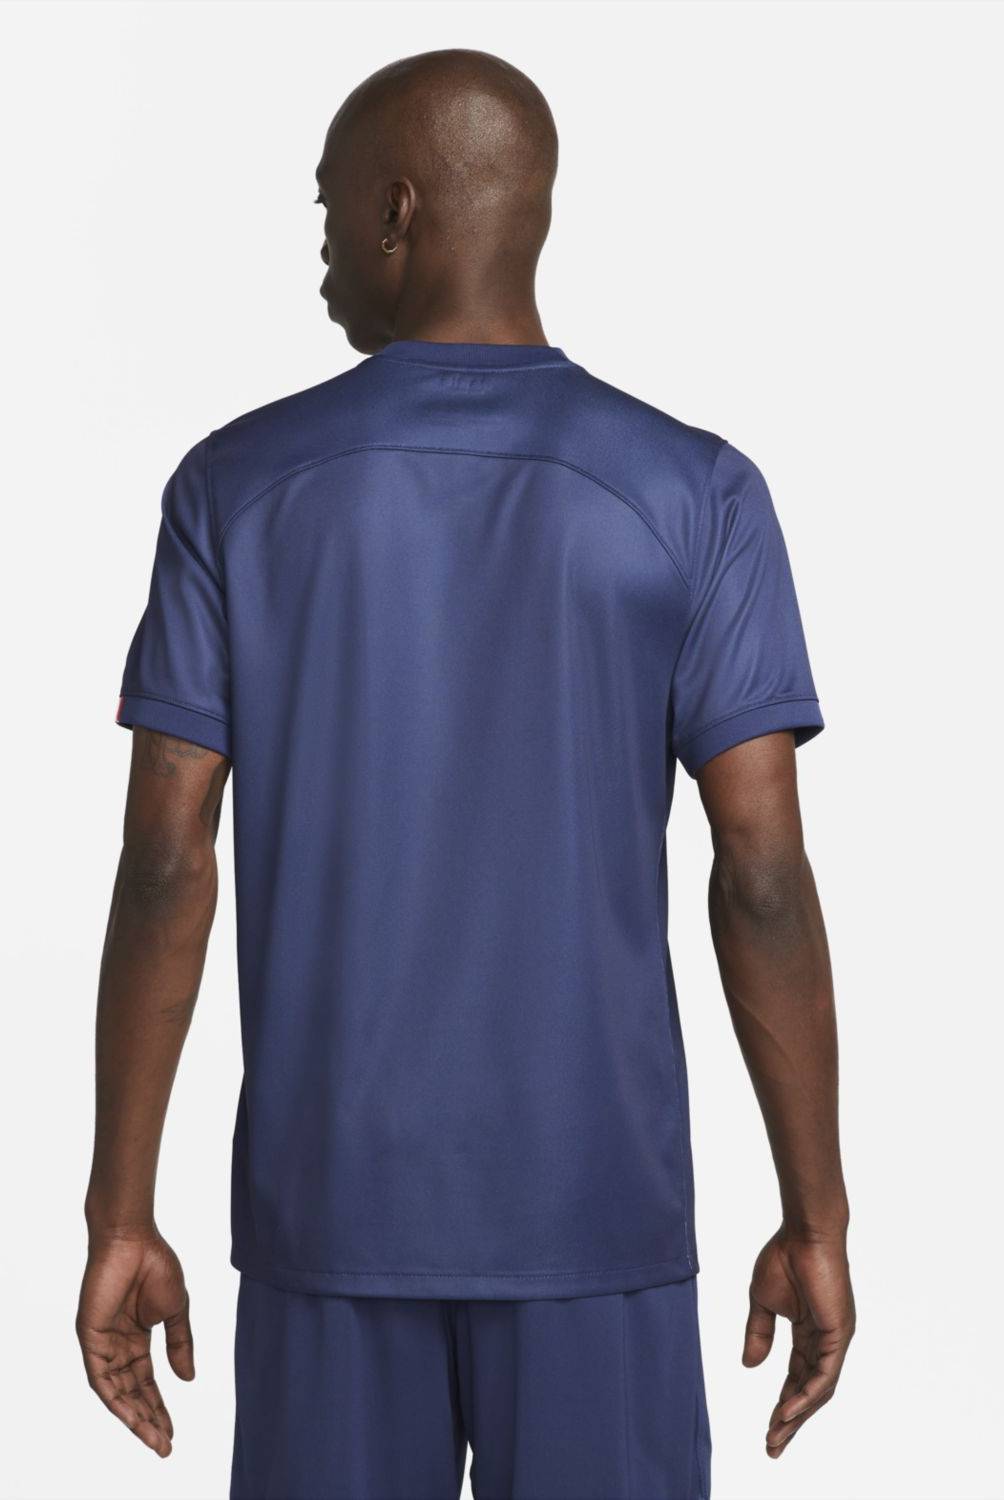 NIKE - Camiseta De Fútbol Psg Local Hombre Nike